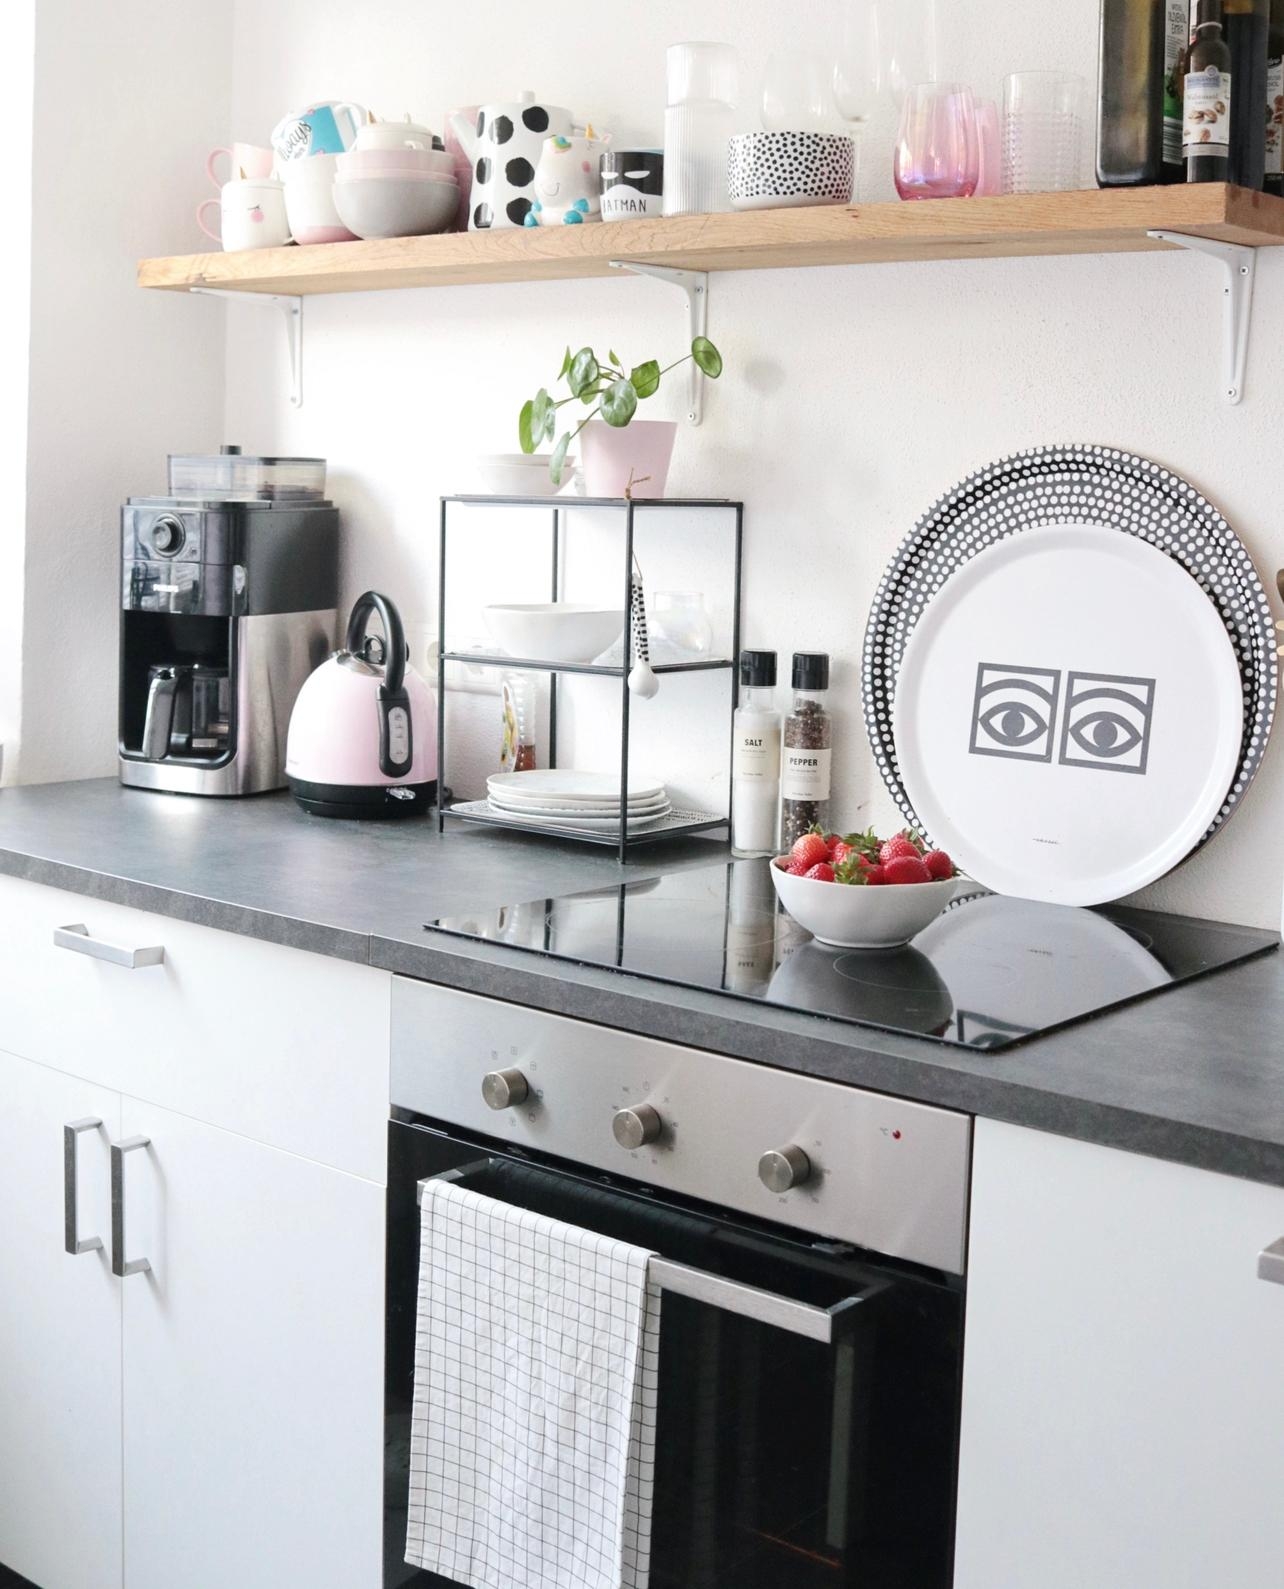 #kitchen #skandi #skandihome #küche #details #deko #küchendeko #kitchendetails #nordic